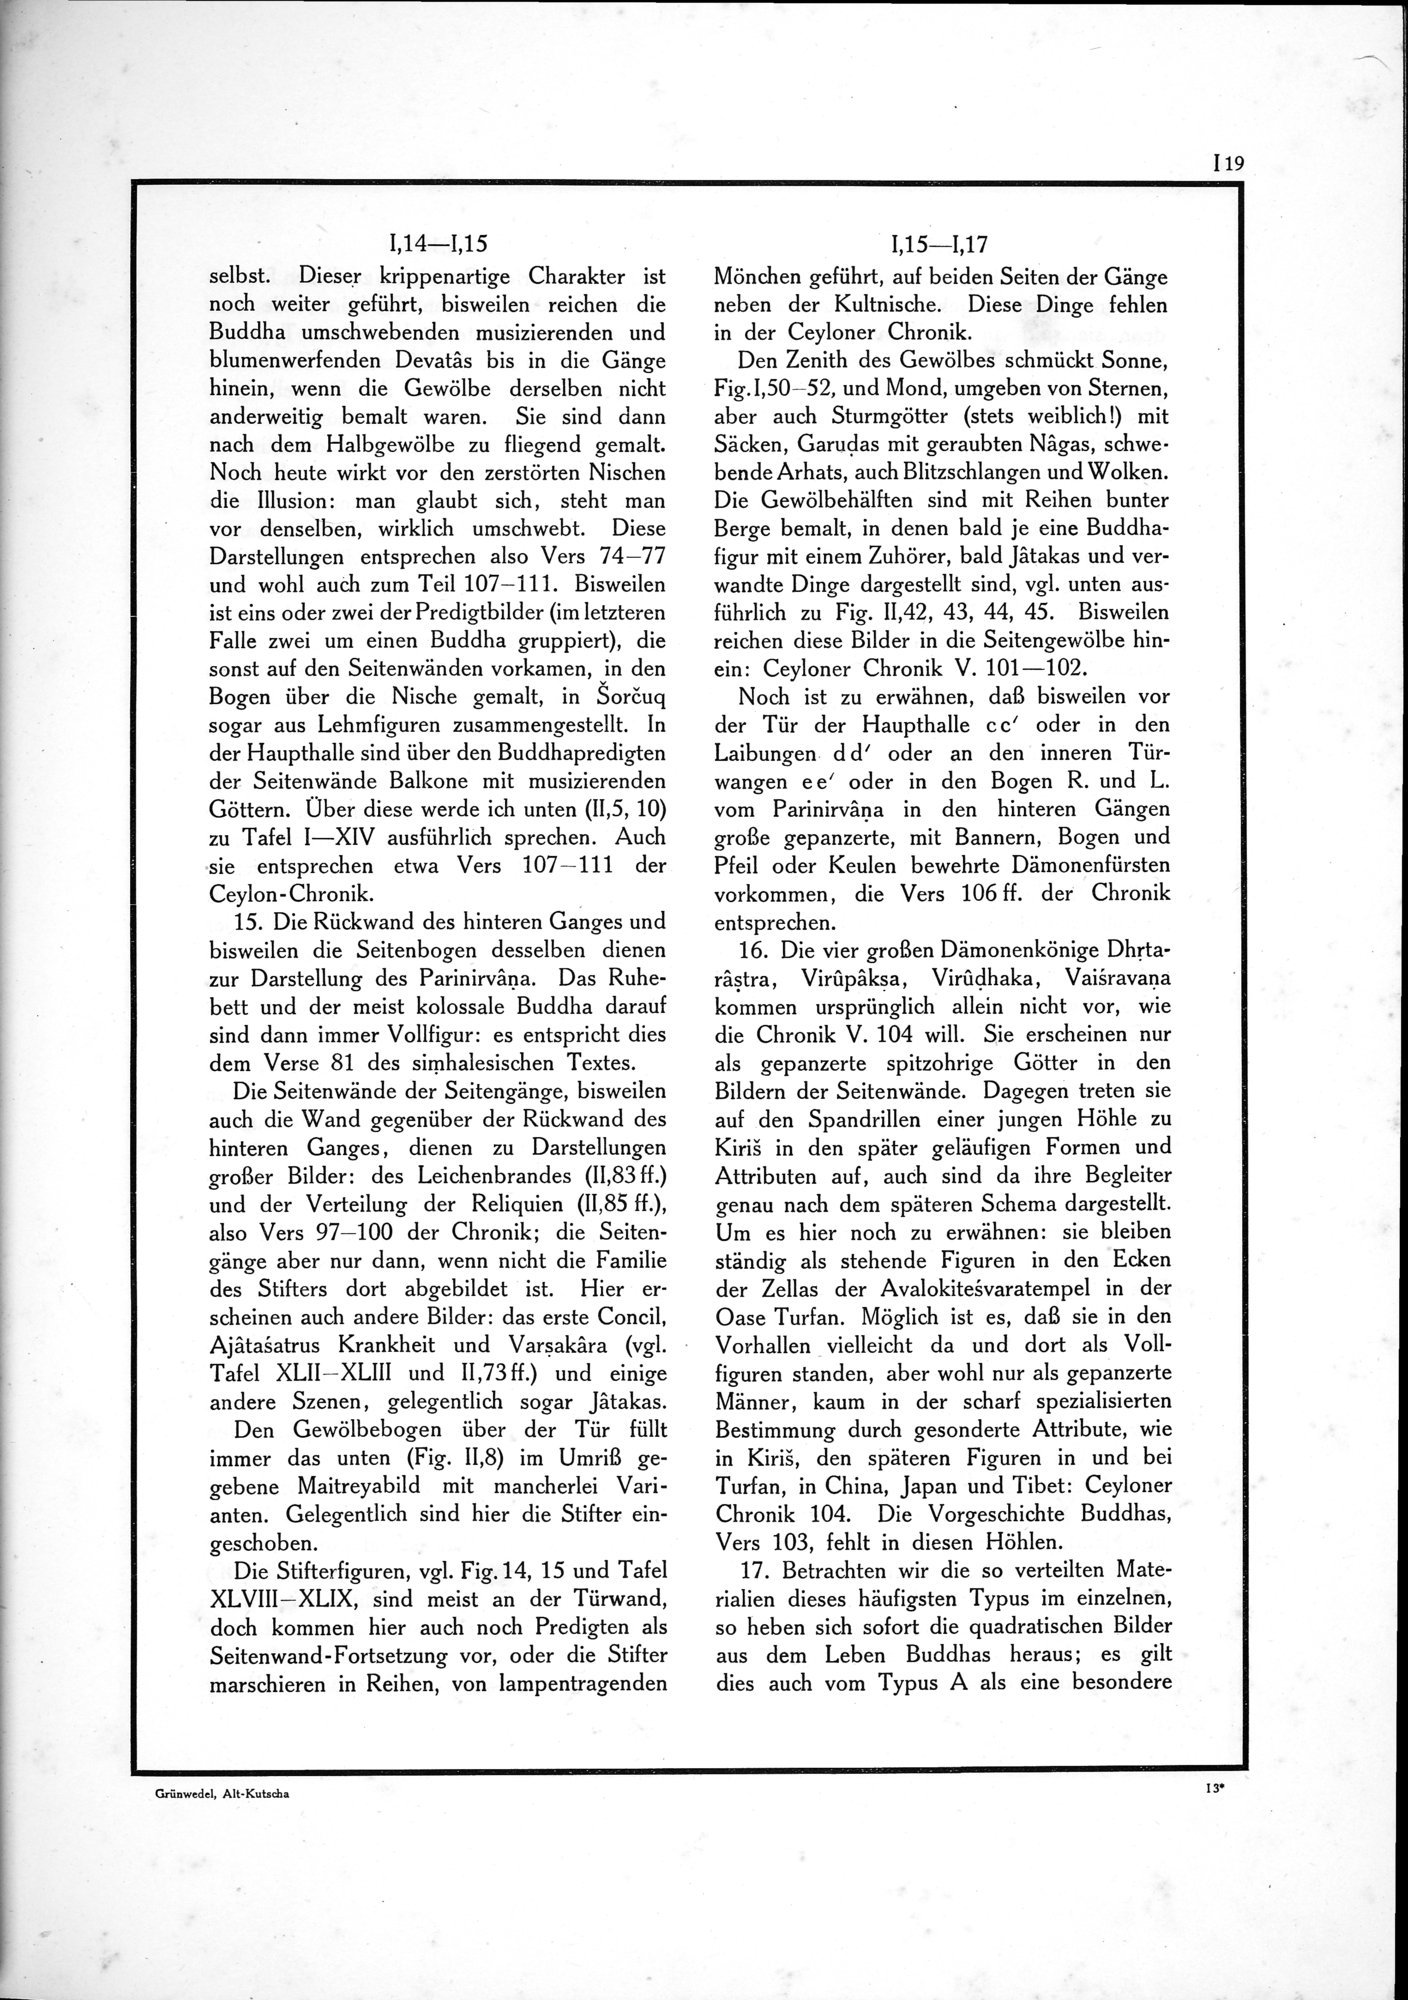 Alt-Kutscha : vol.1 / Page 31 (Grayscale High Resolution Image)